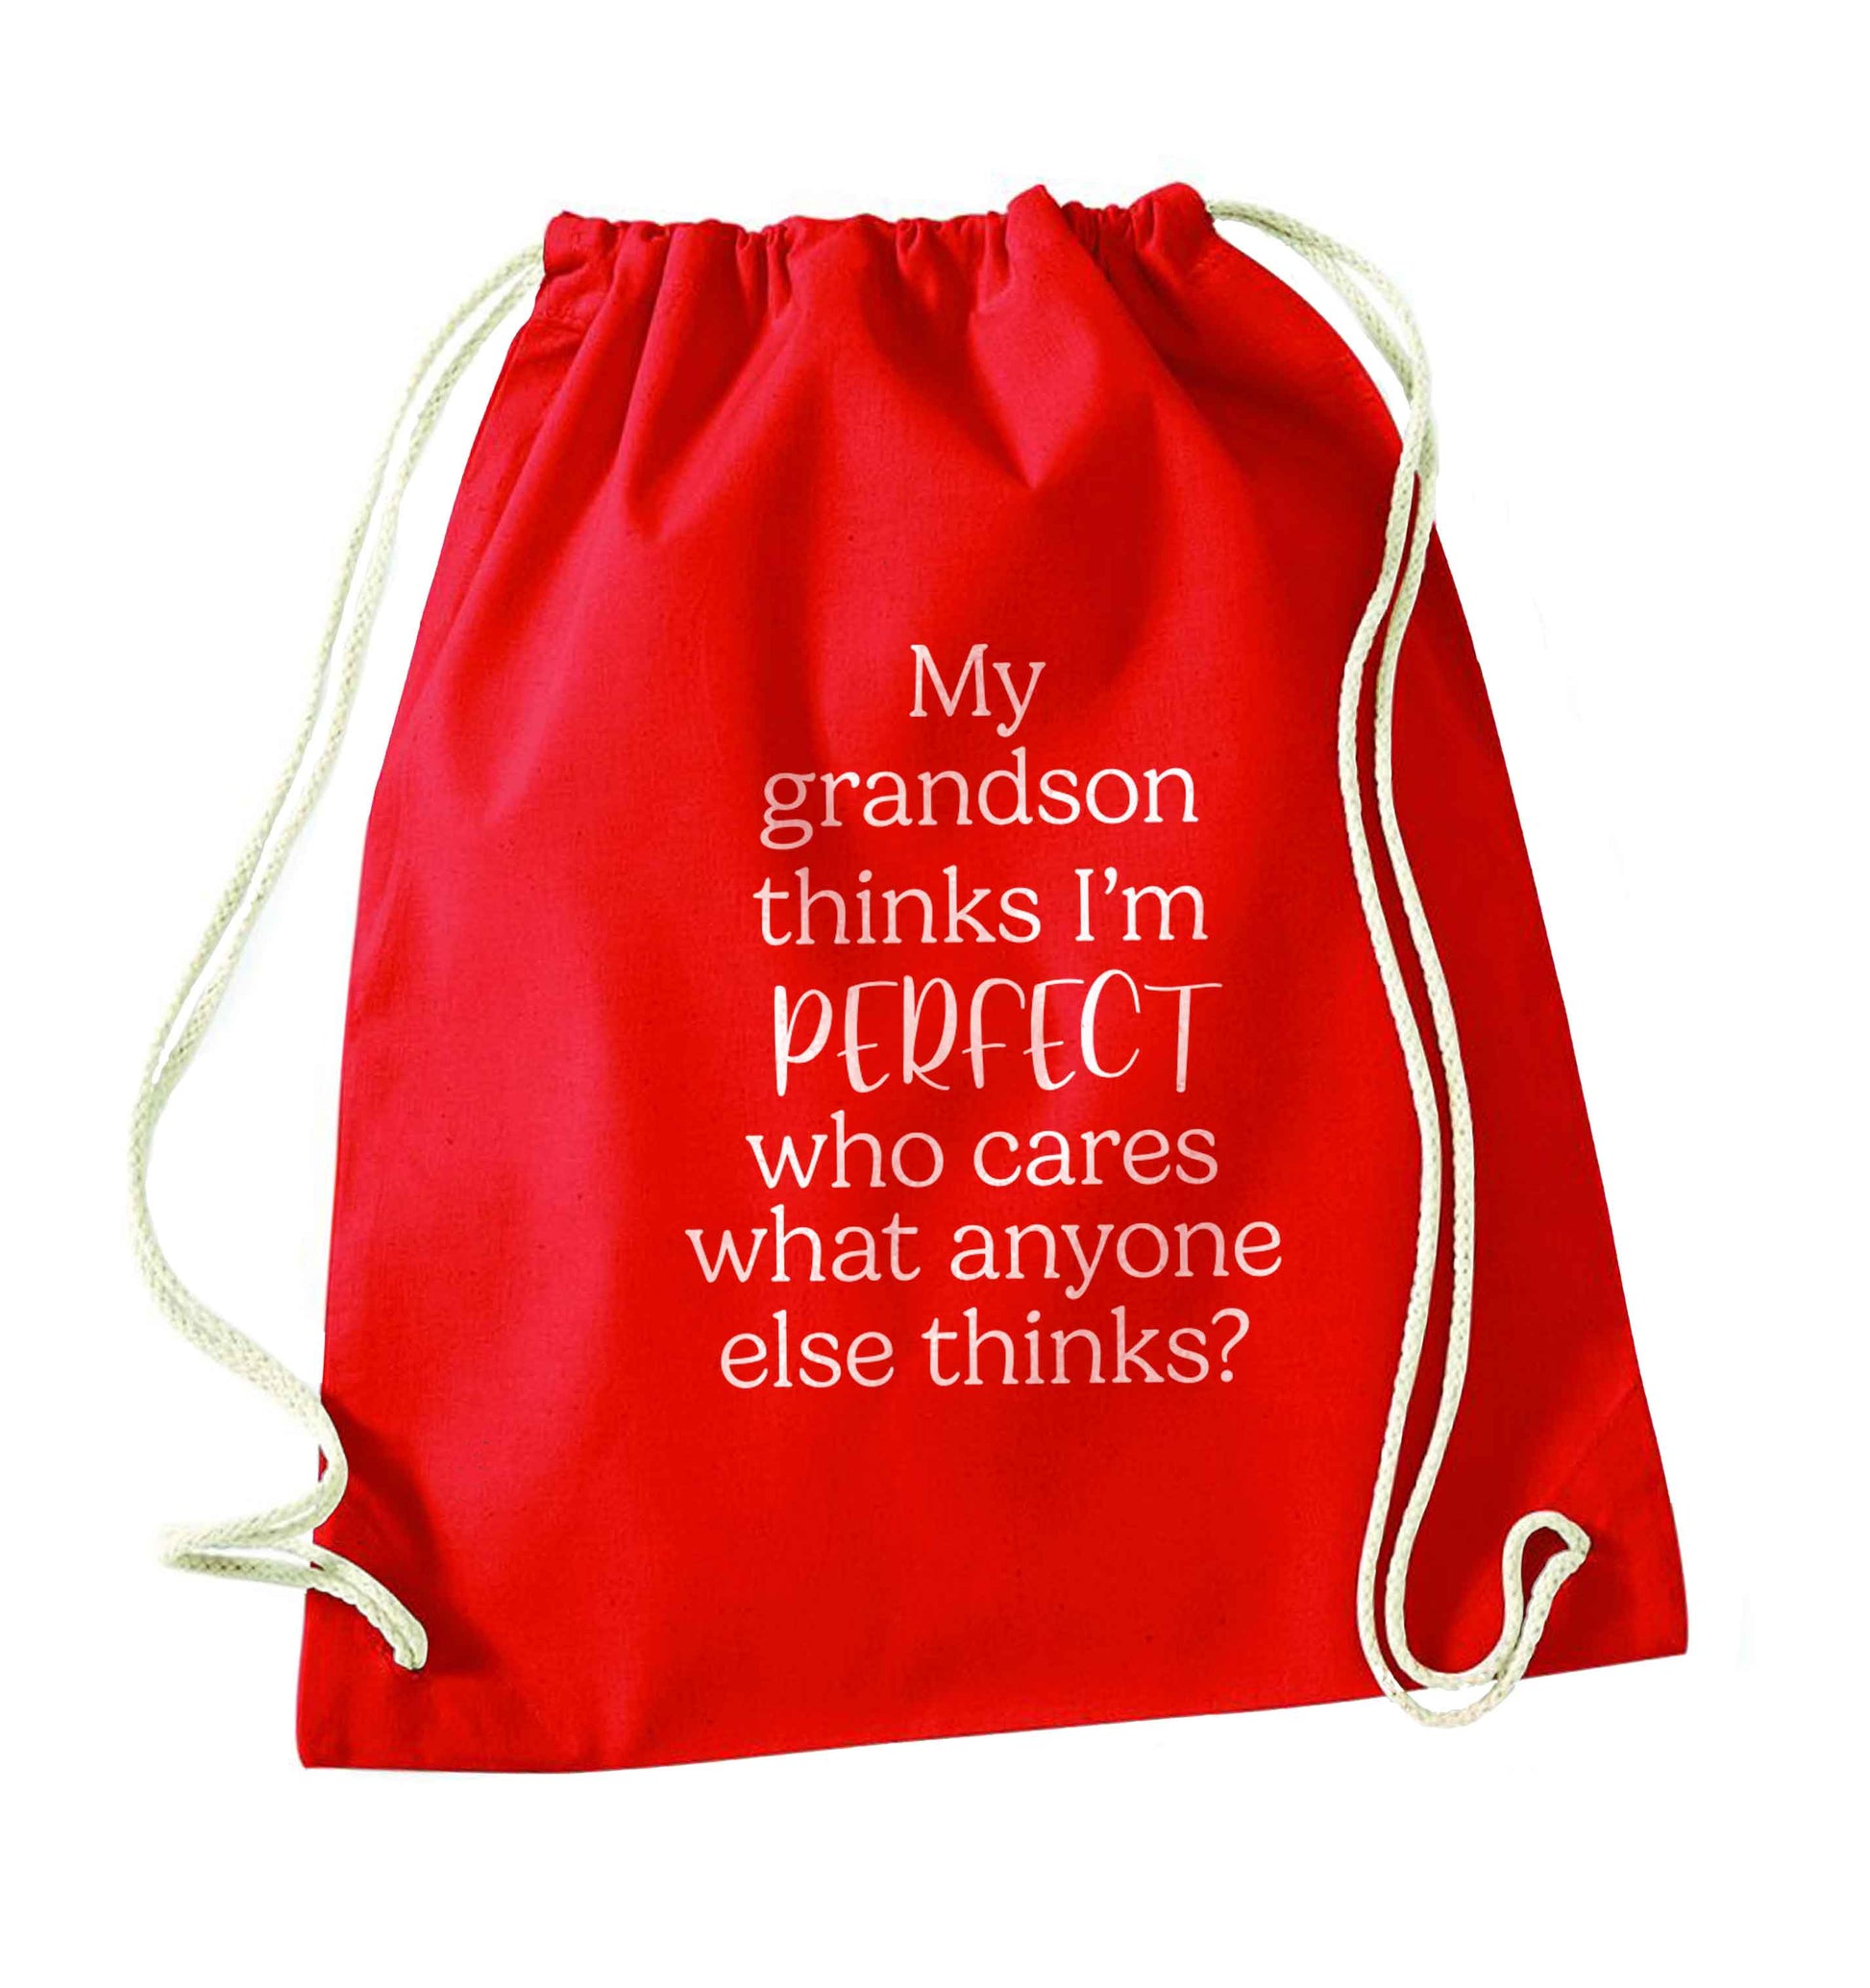 My grandson thinks I'm perfect red drawstring bag 